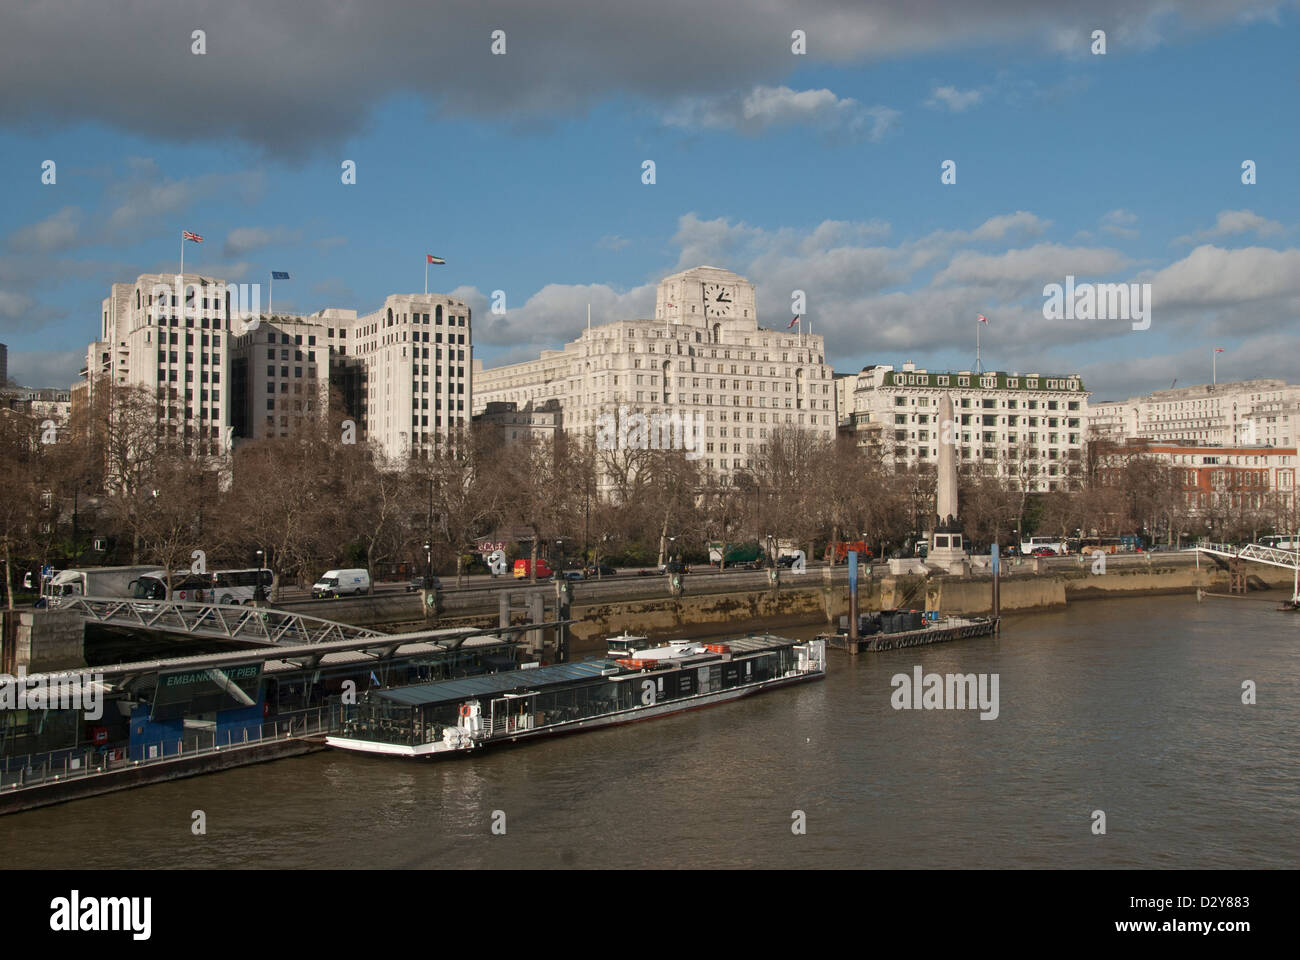 Edifici lungo argine del fiume Tamigi, Londra, Inghilterra Foto Stock